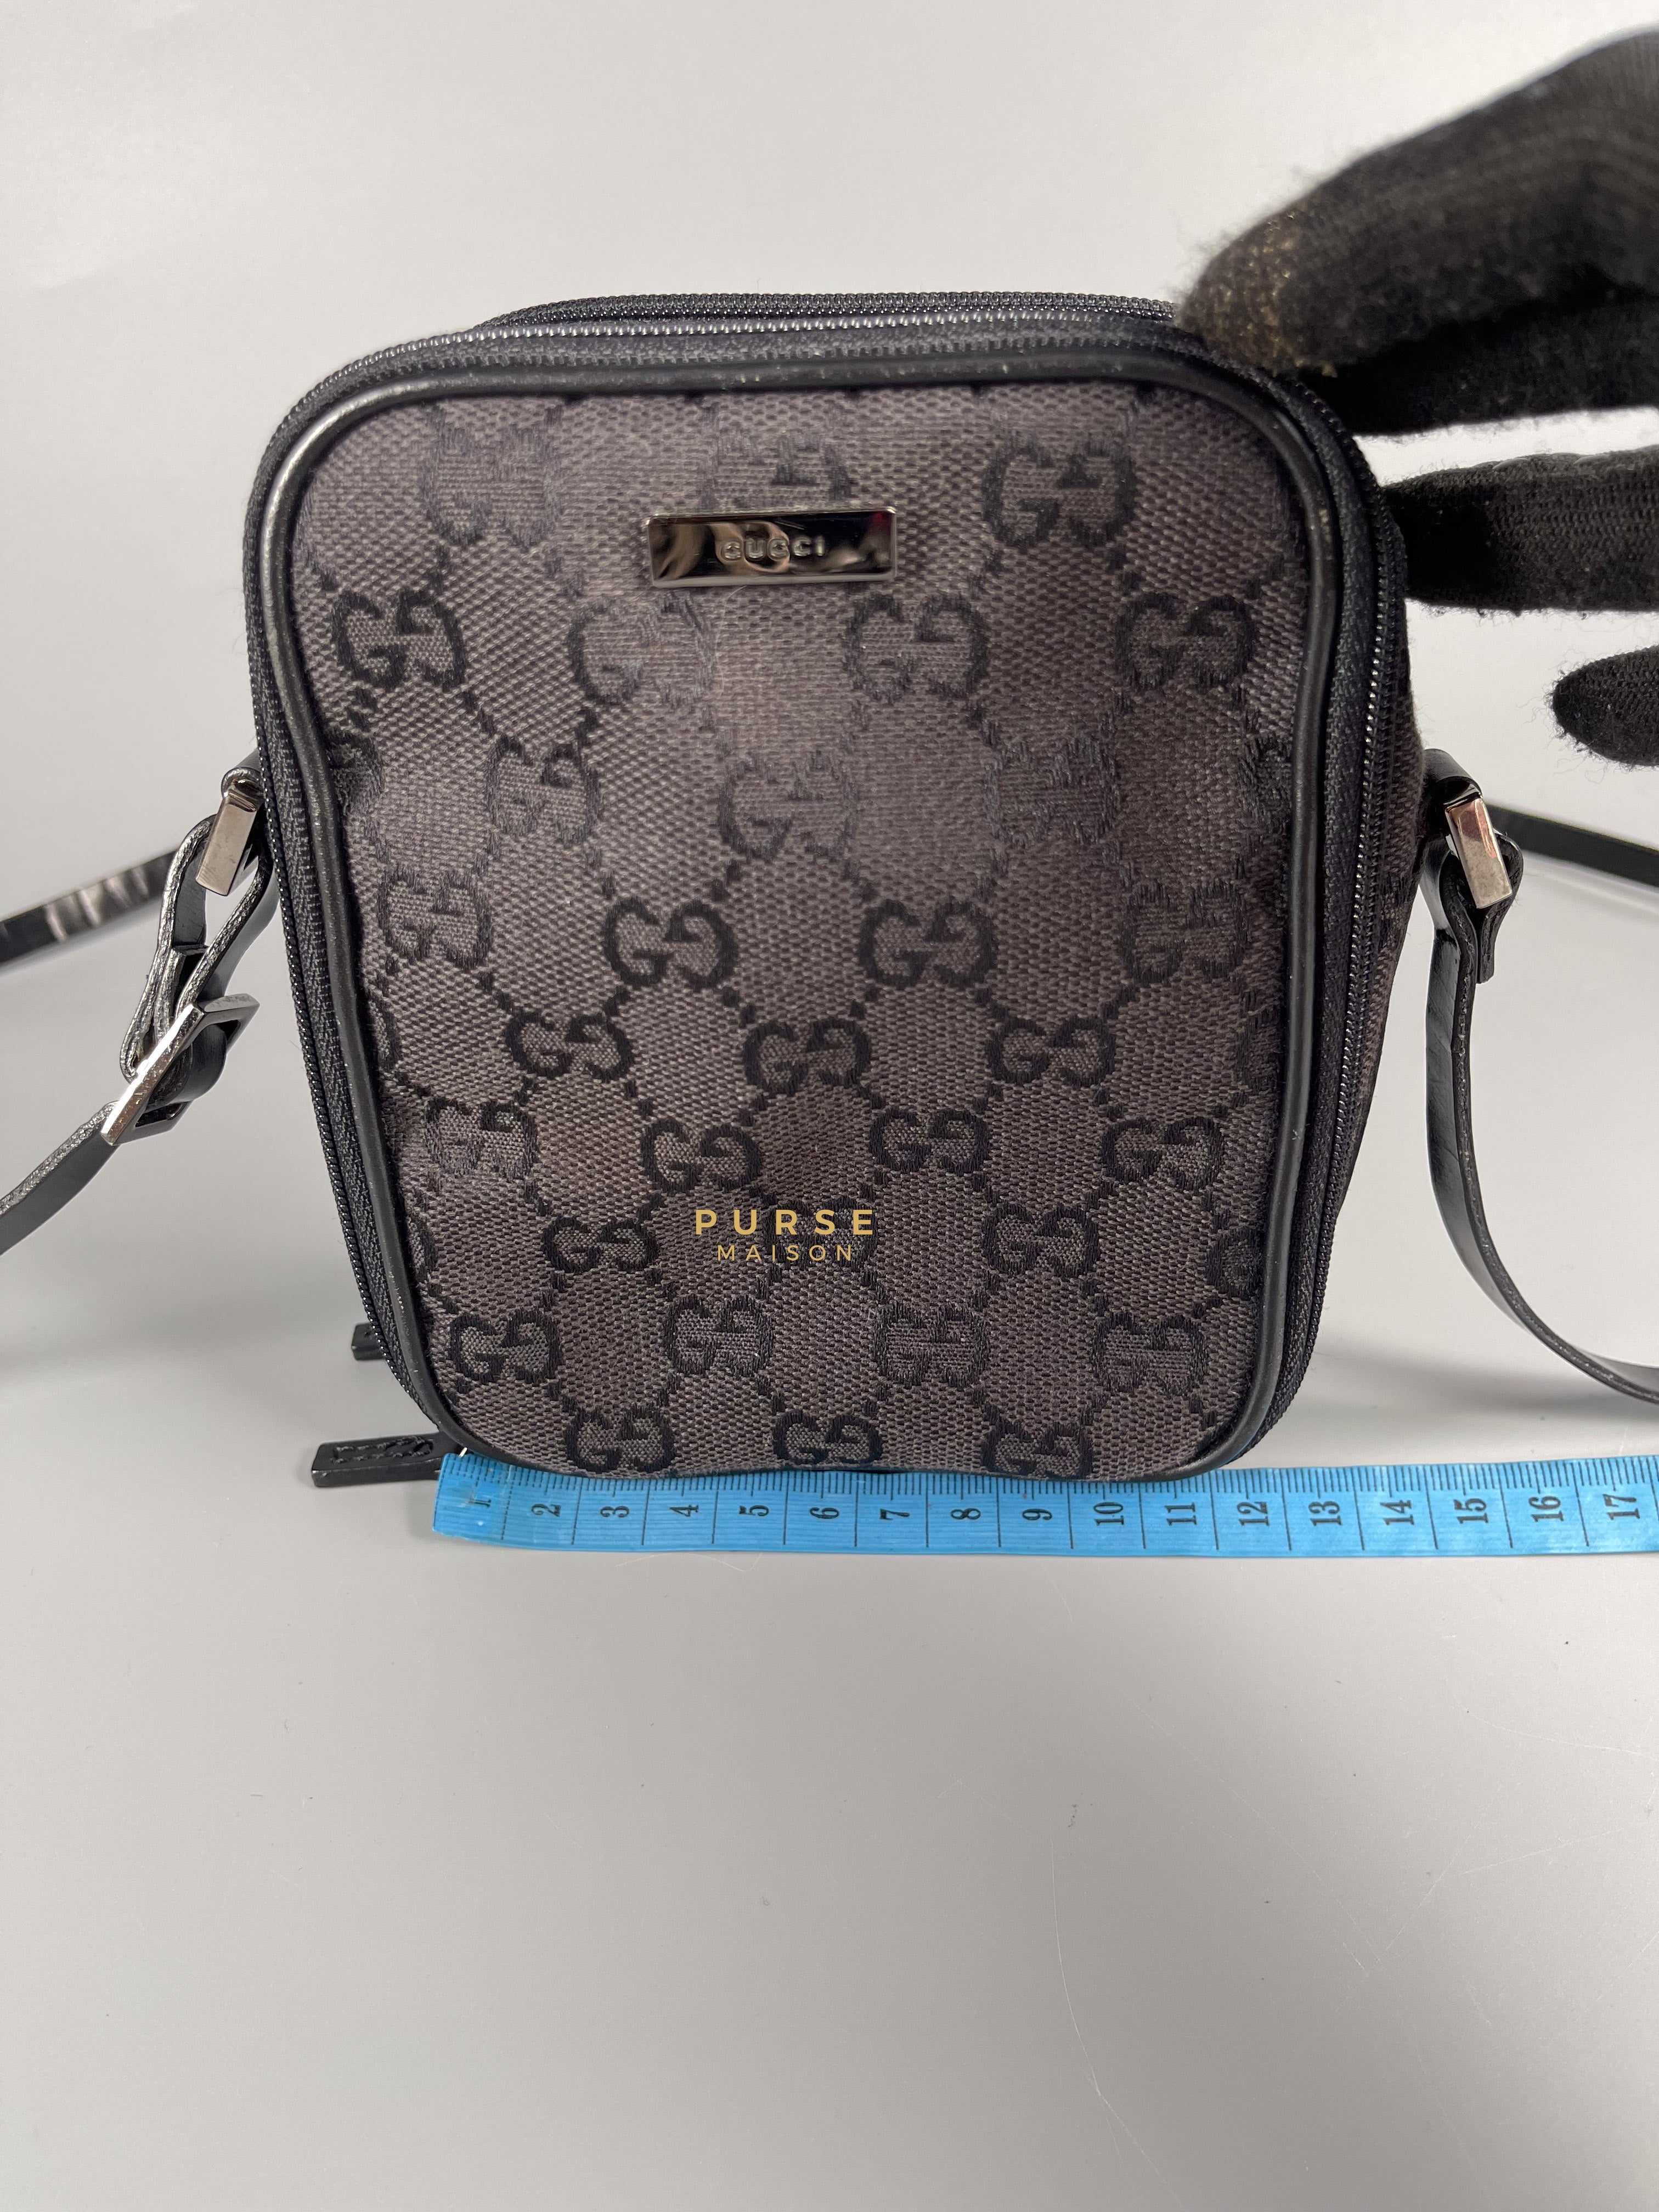 Gucci Black GG Canvas Mini Crossbodaly Bag | Purse Maison Luxury Bags Shop